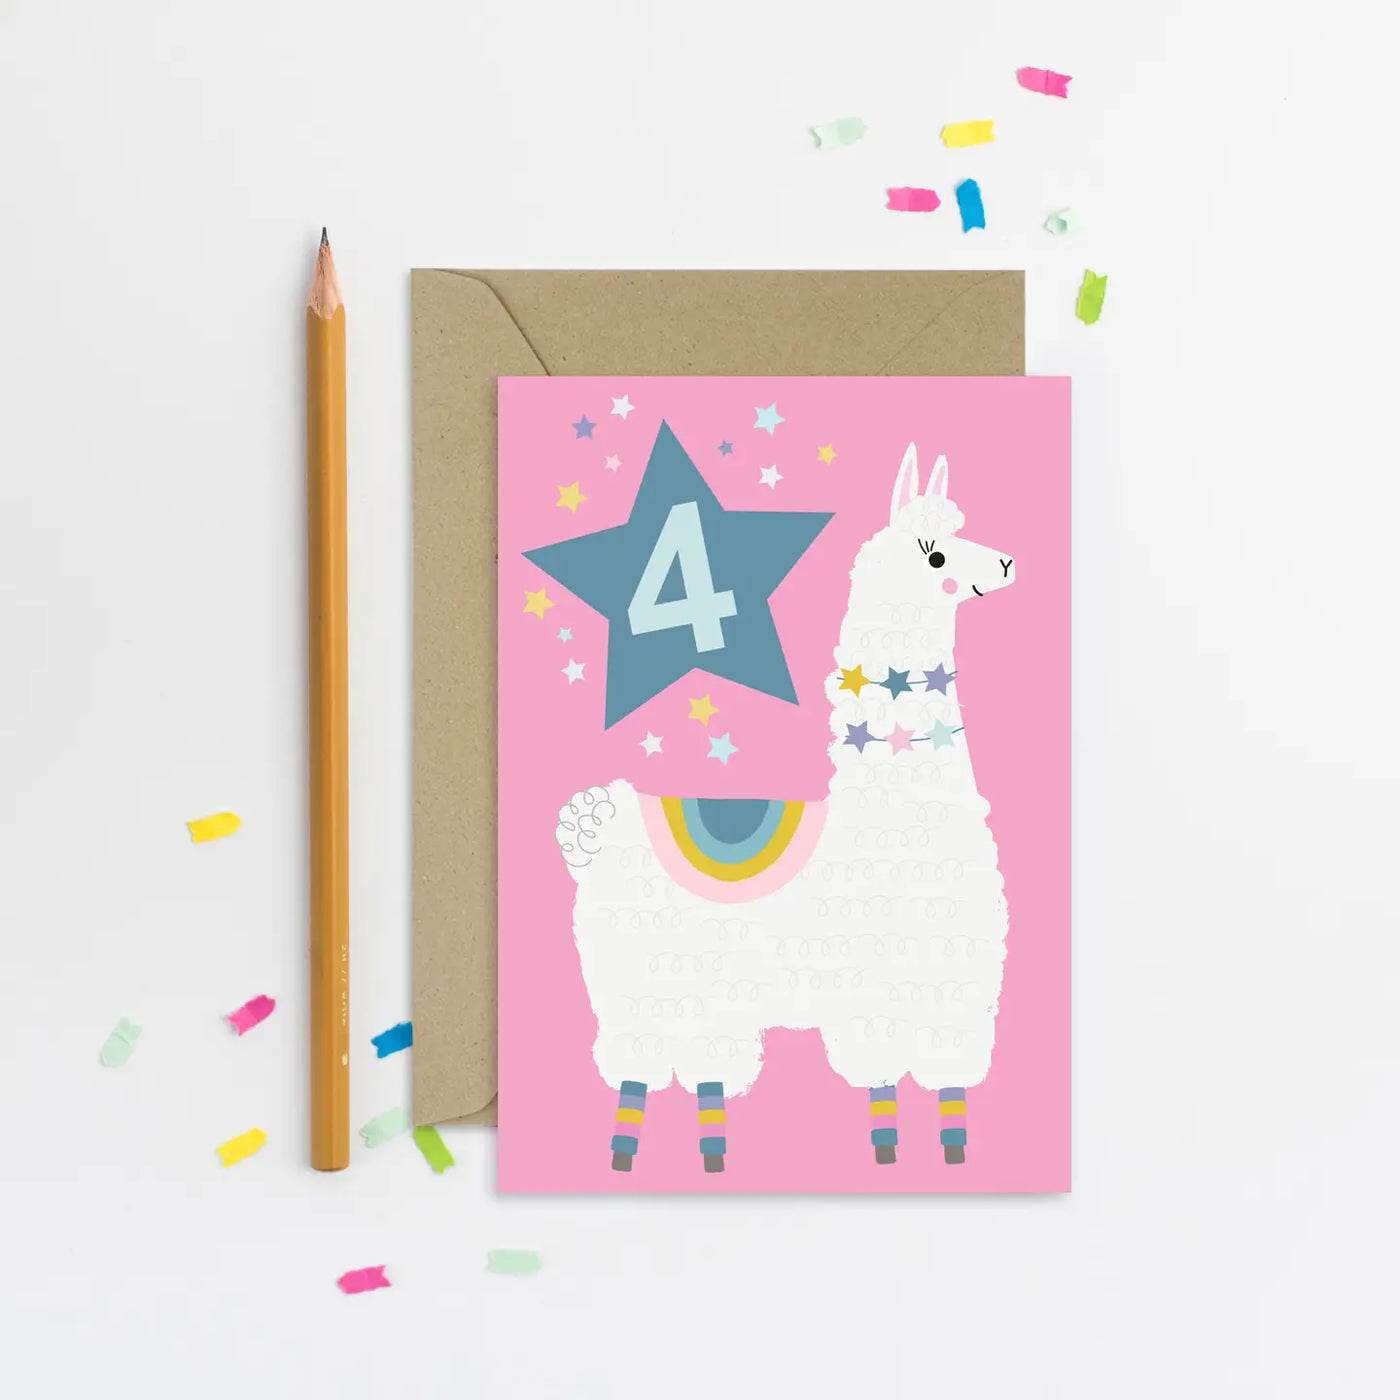 Age 4 Llama Children's Birthday Card - Greeting Cards - Edie & Eve